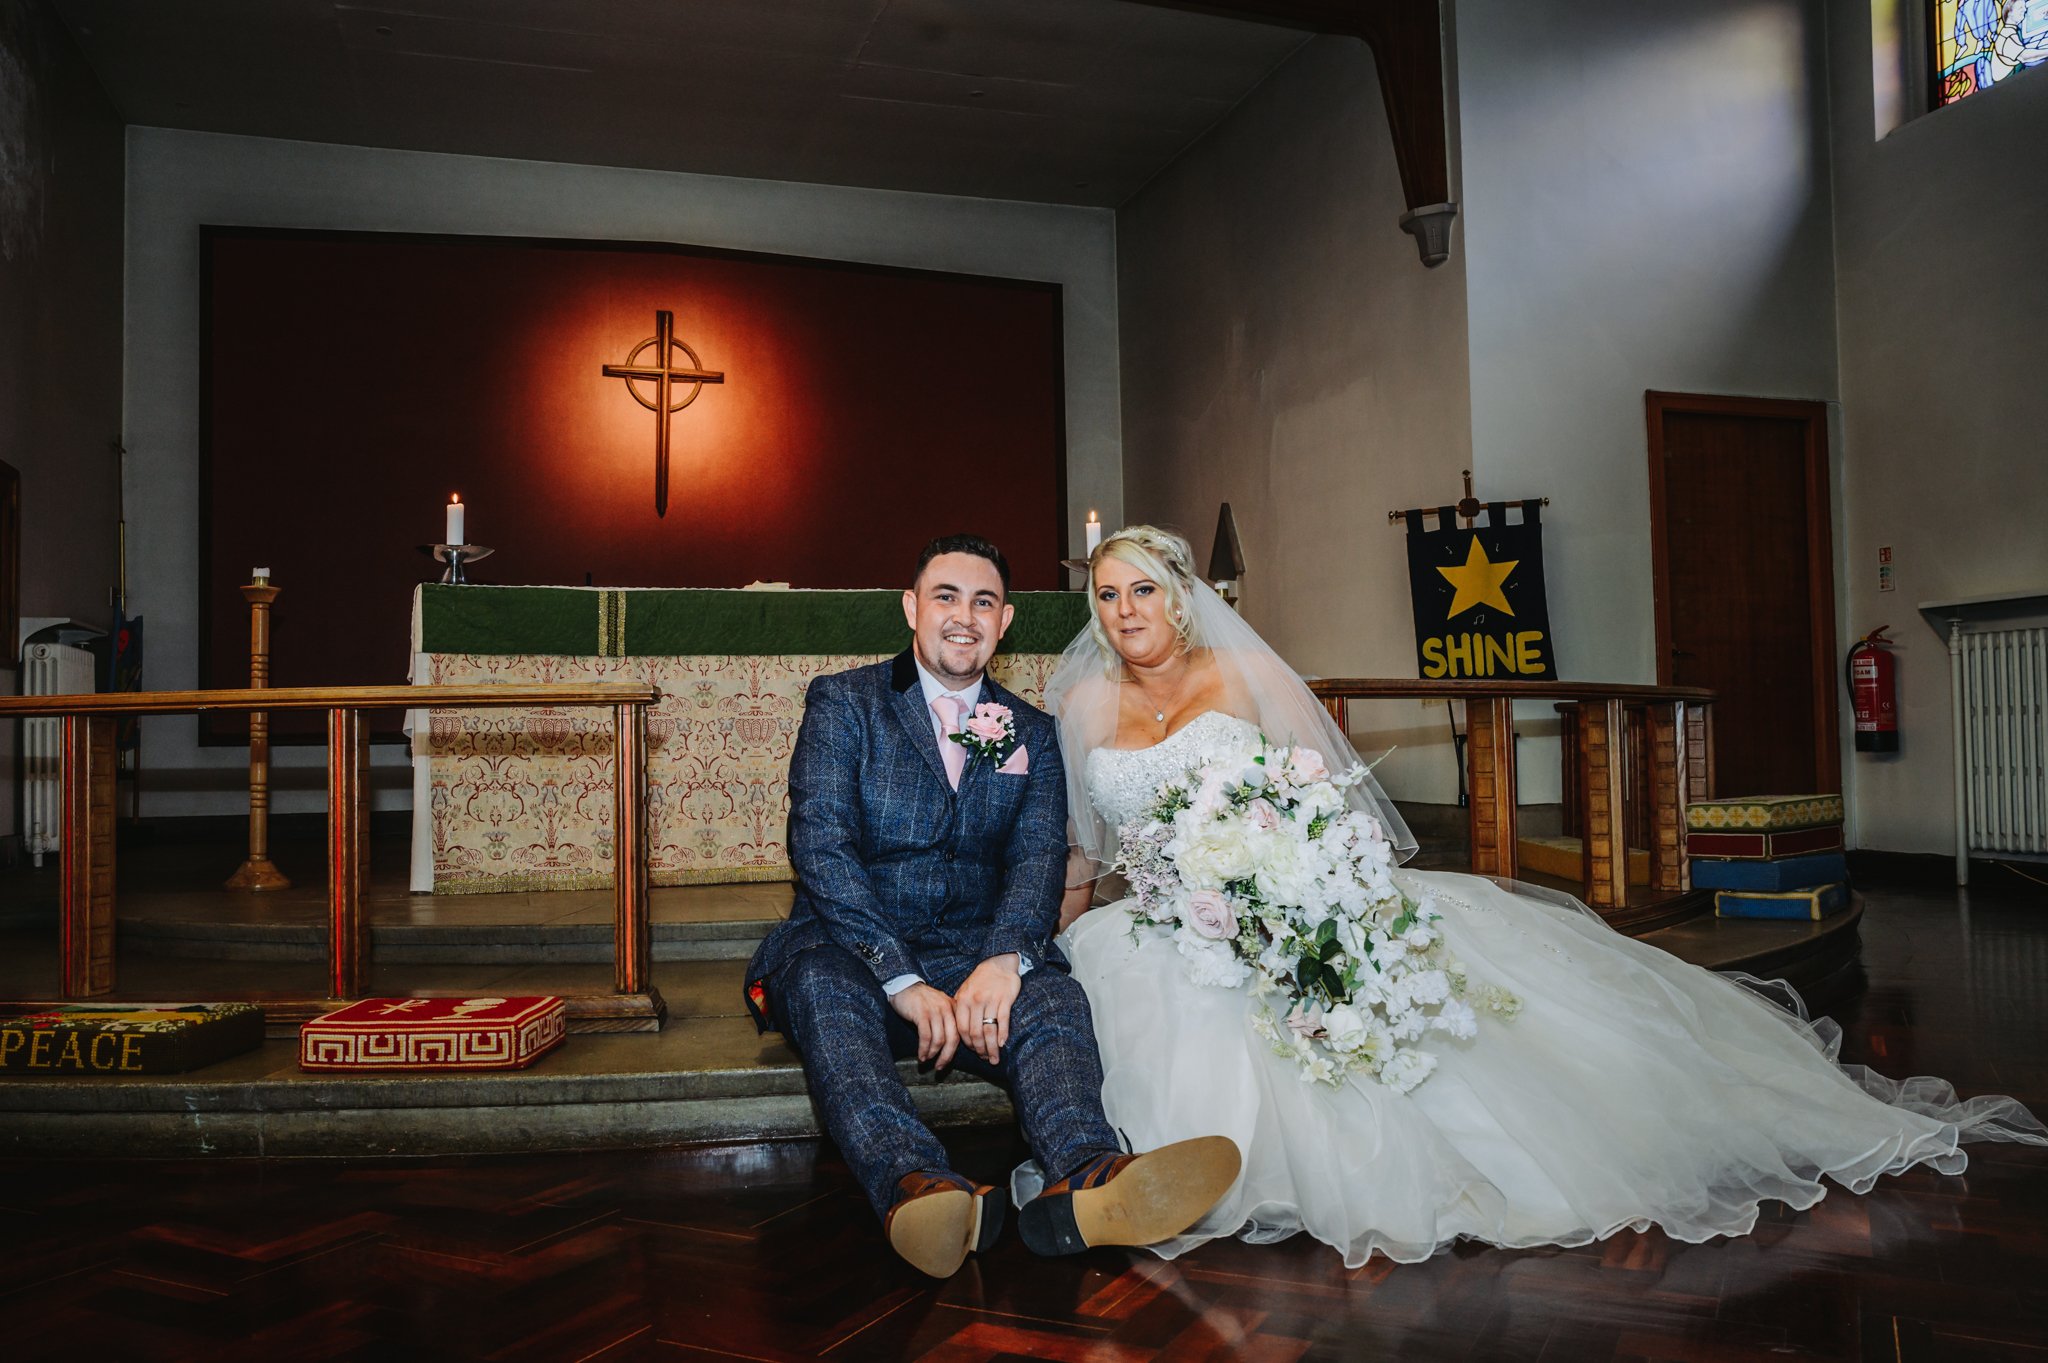 Saint-Clares-Church-Newton-Aycliffe-wedding-photograper (12 of 13).jpg